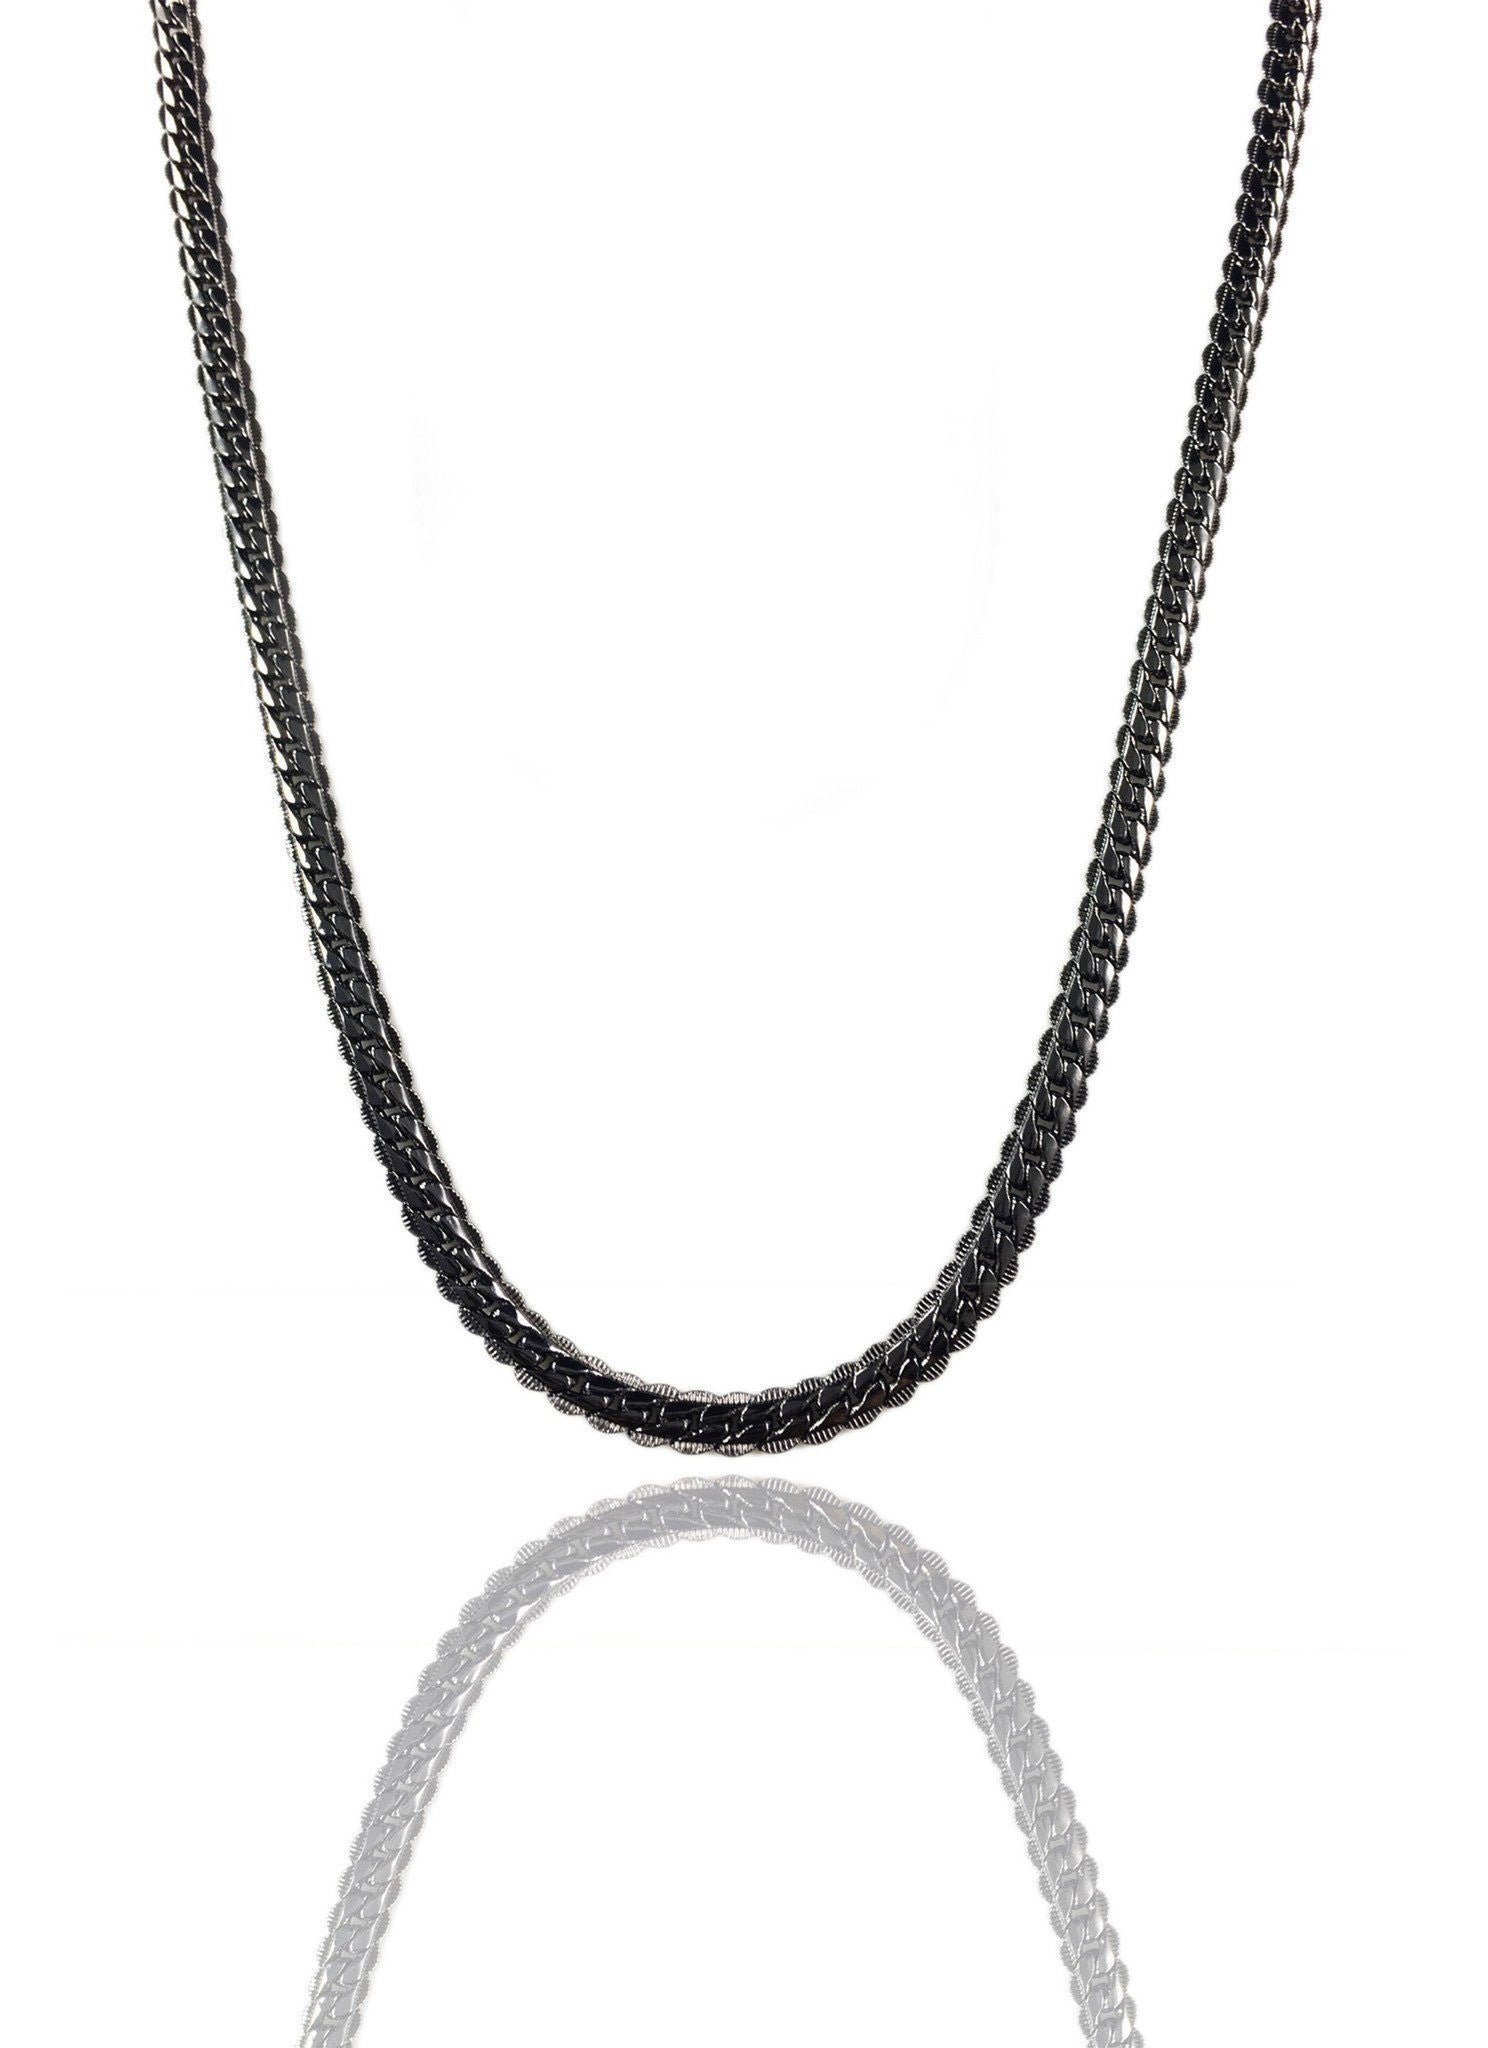 Necklace - The Cadena Chain X BLΛCK